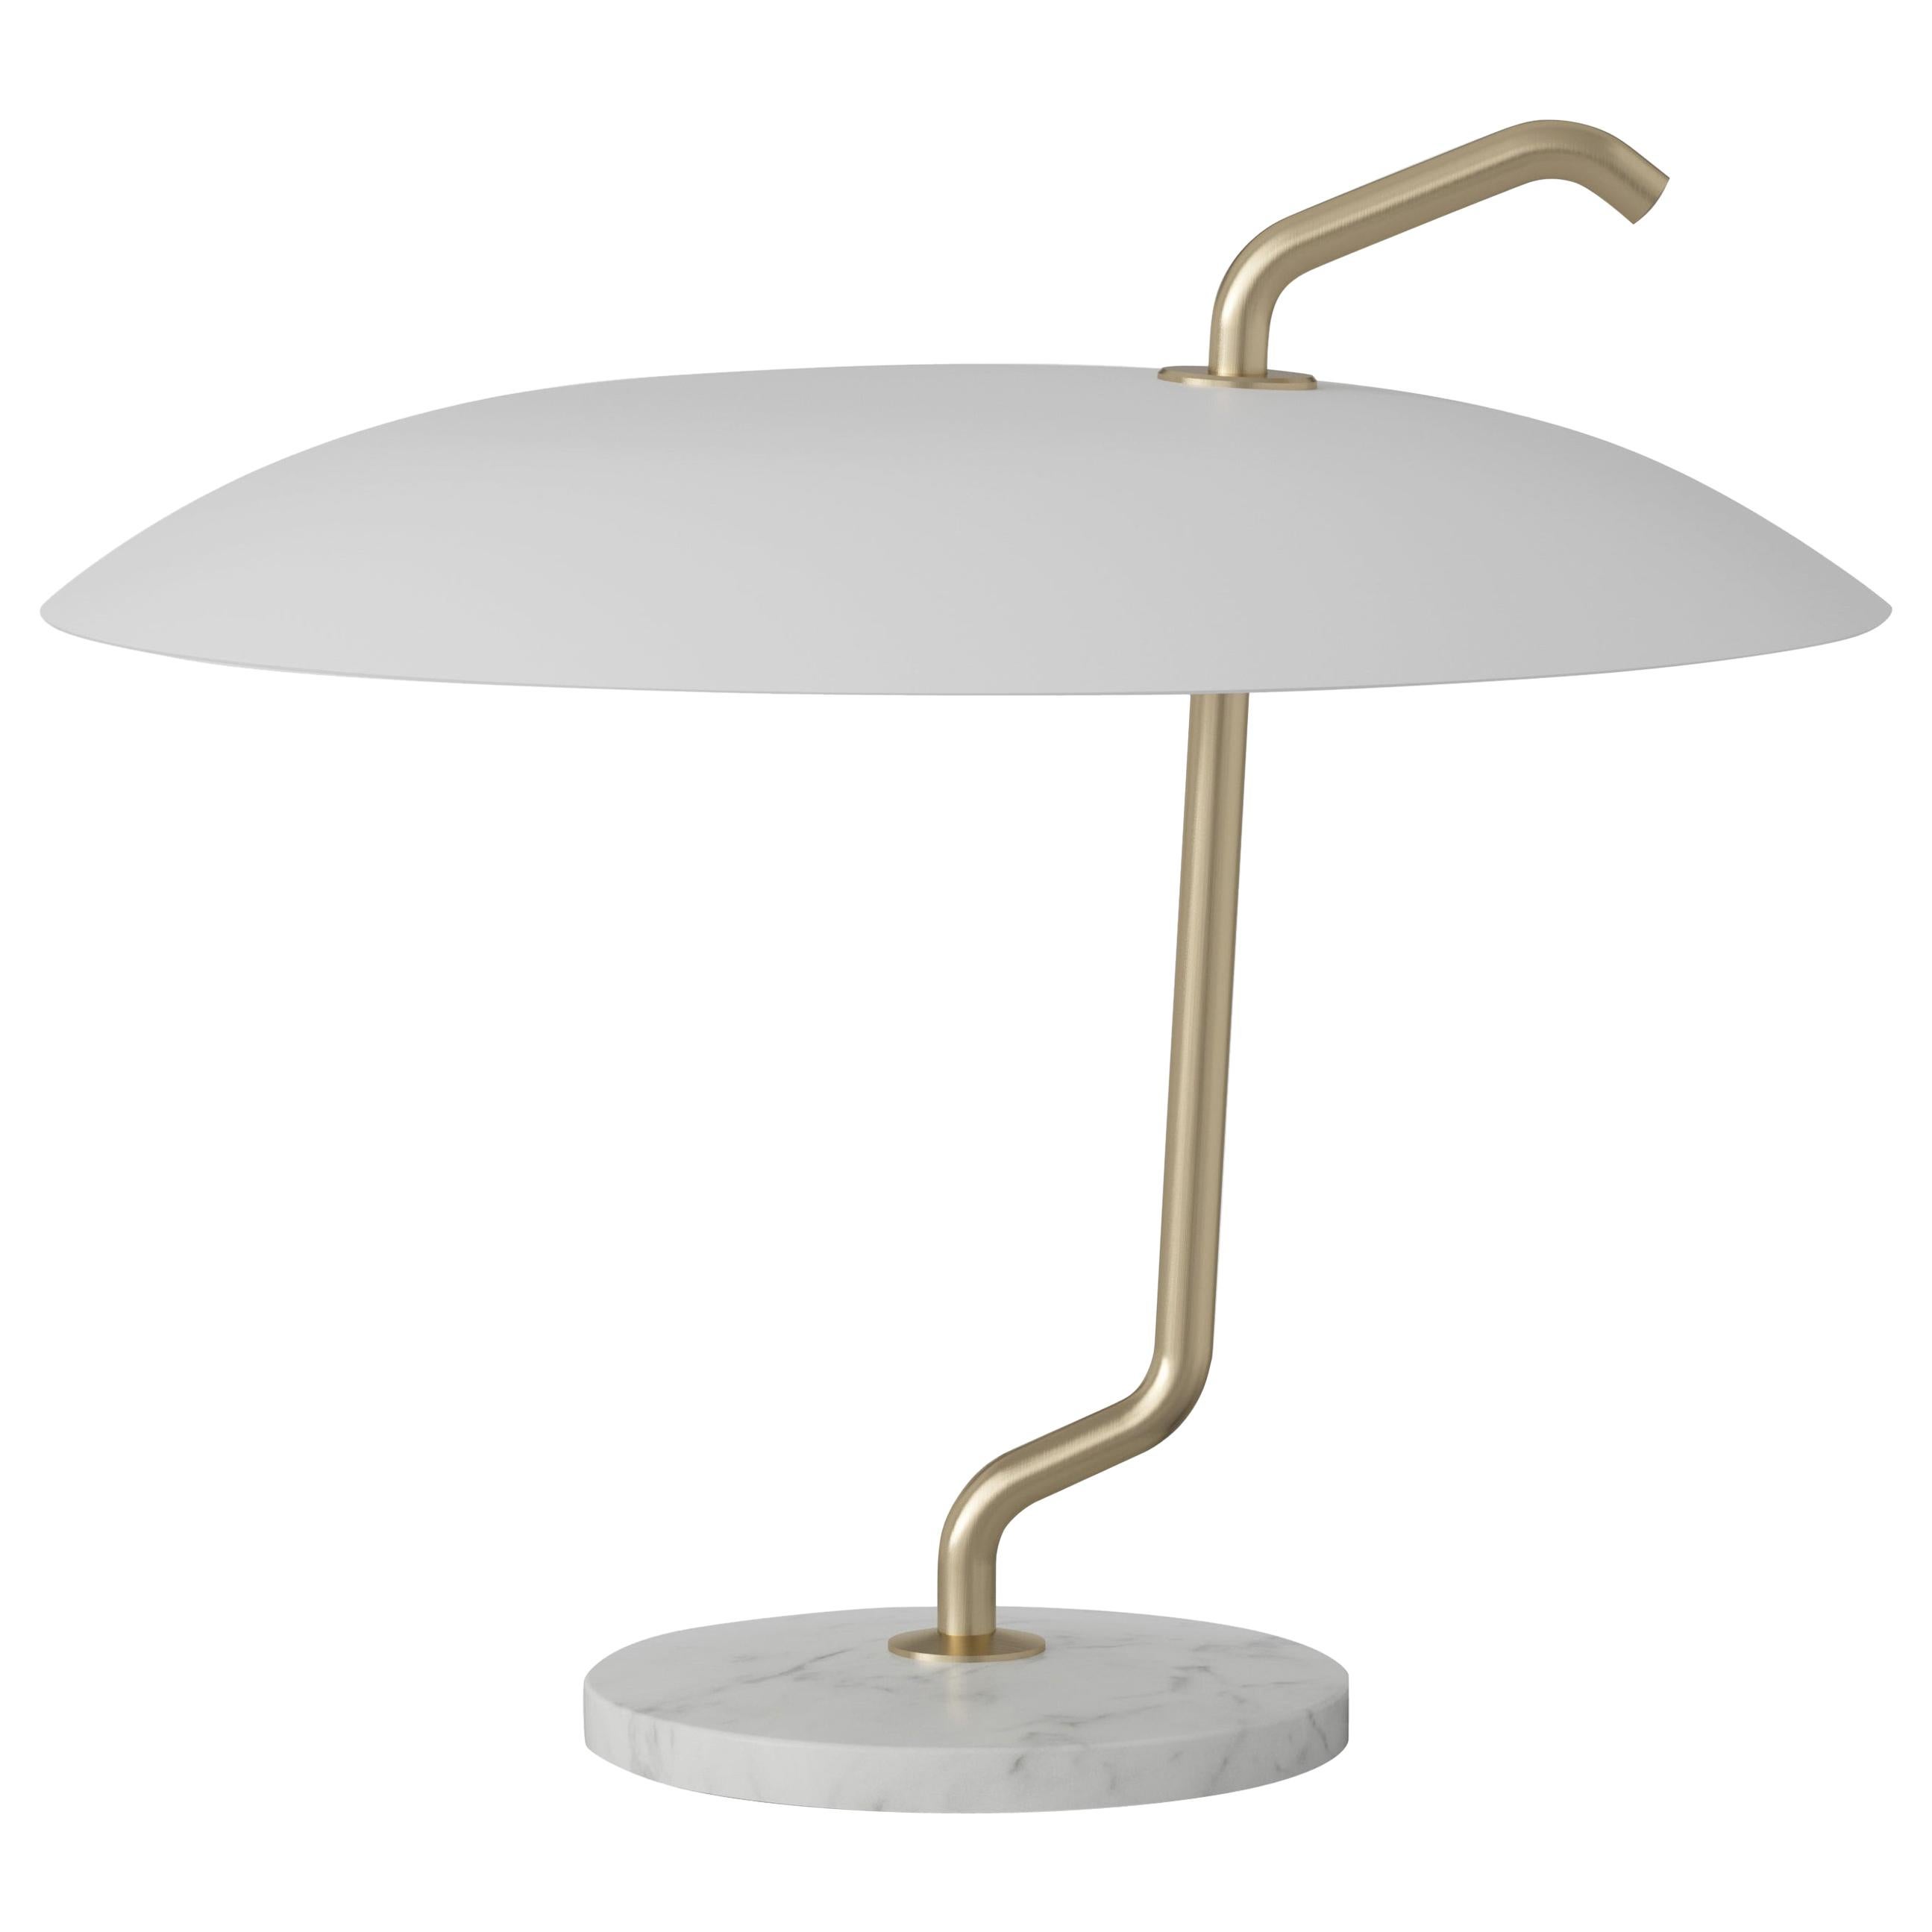 Gino Sarfatti Lamp Model 537 Brass Structure, White Reflector, White Marble